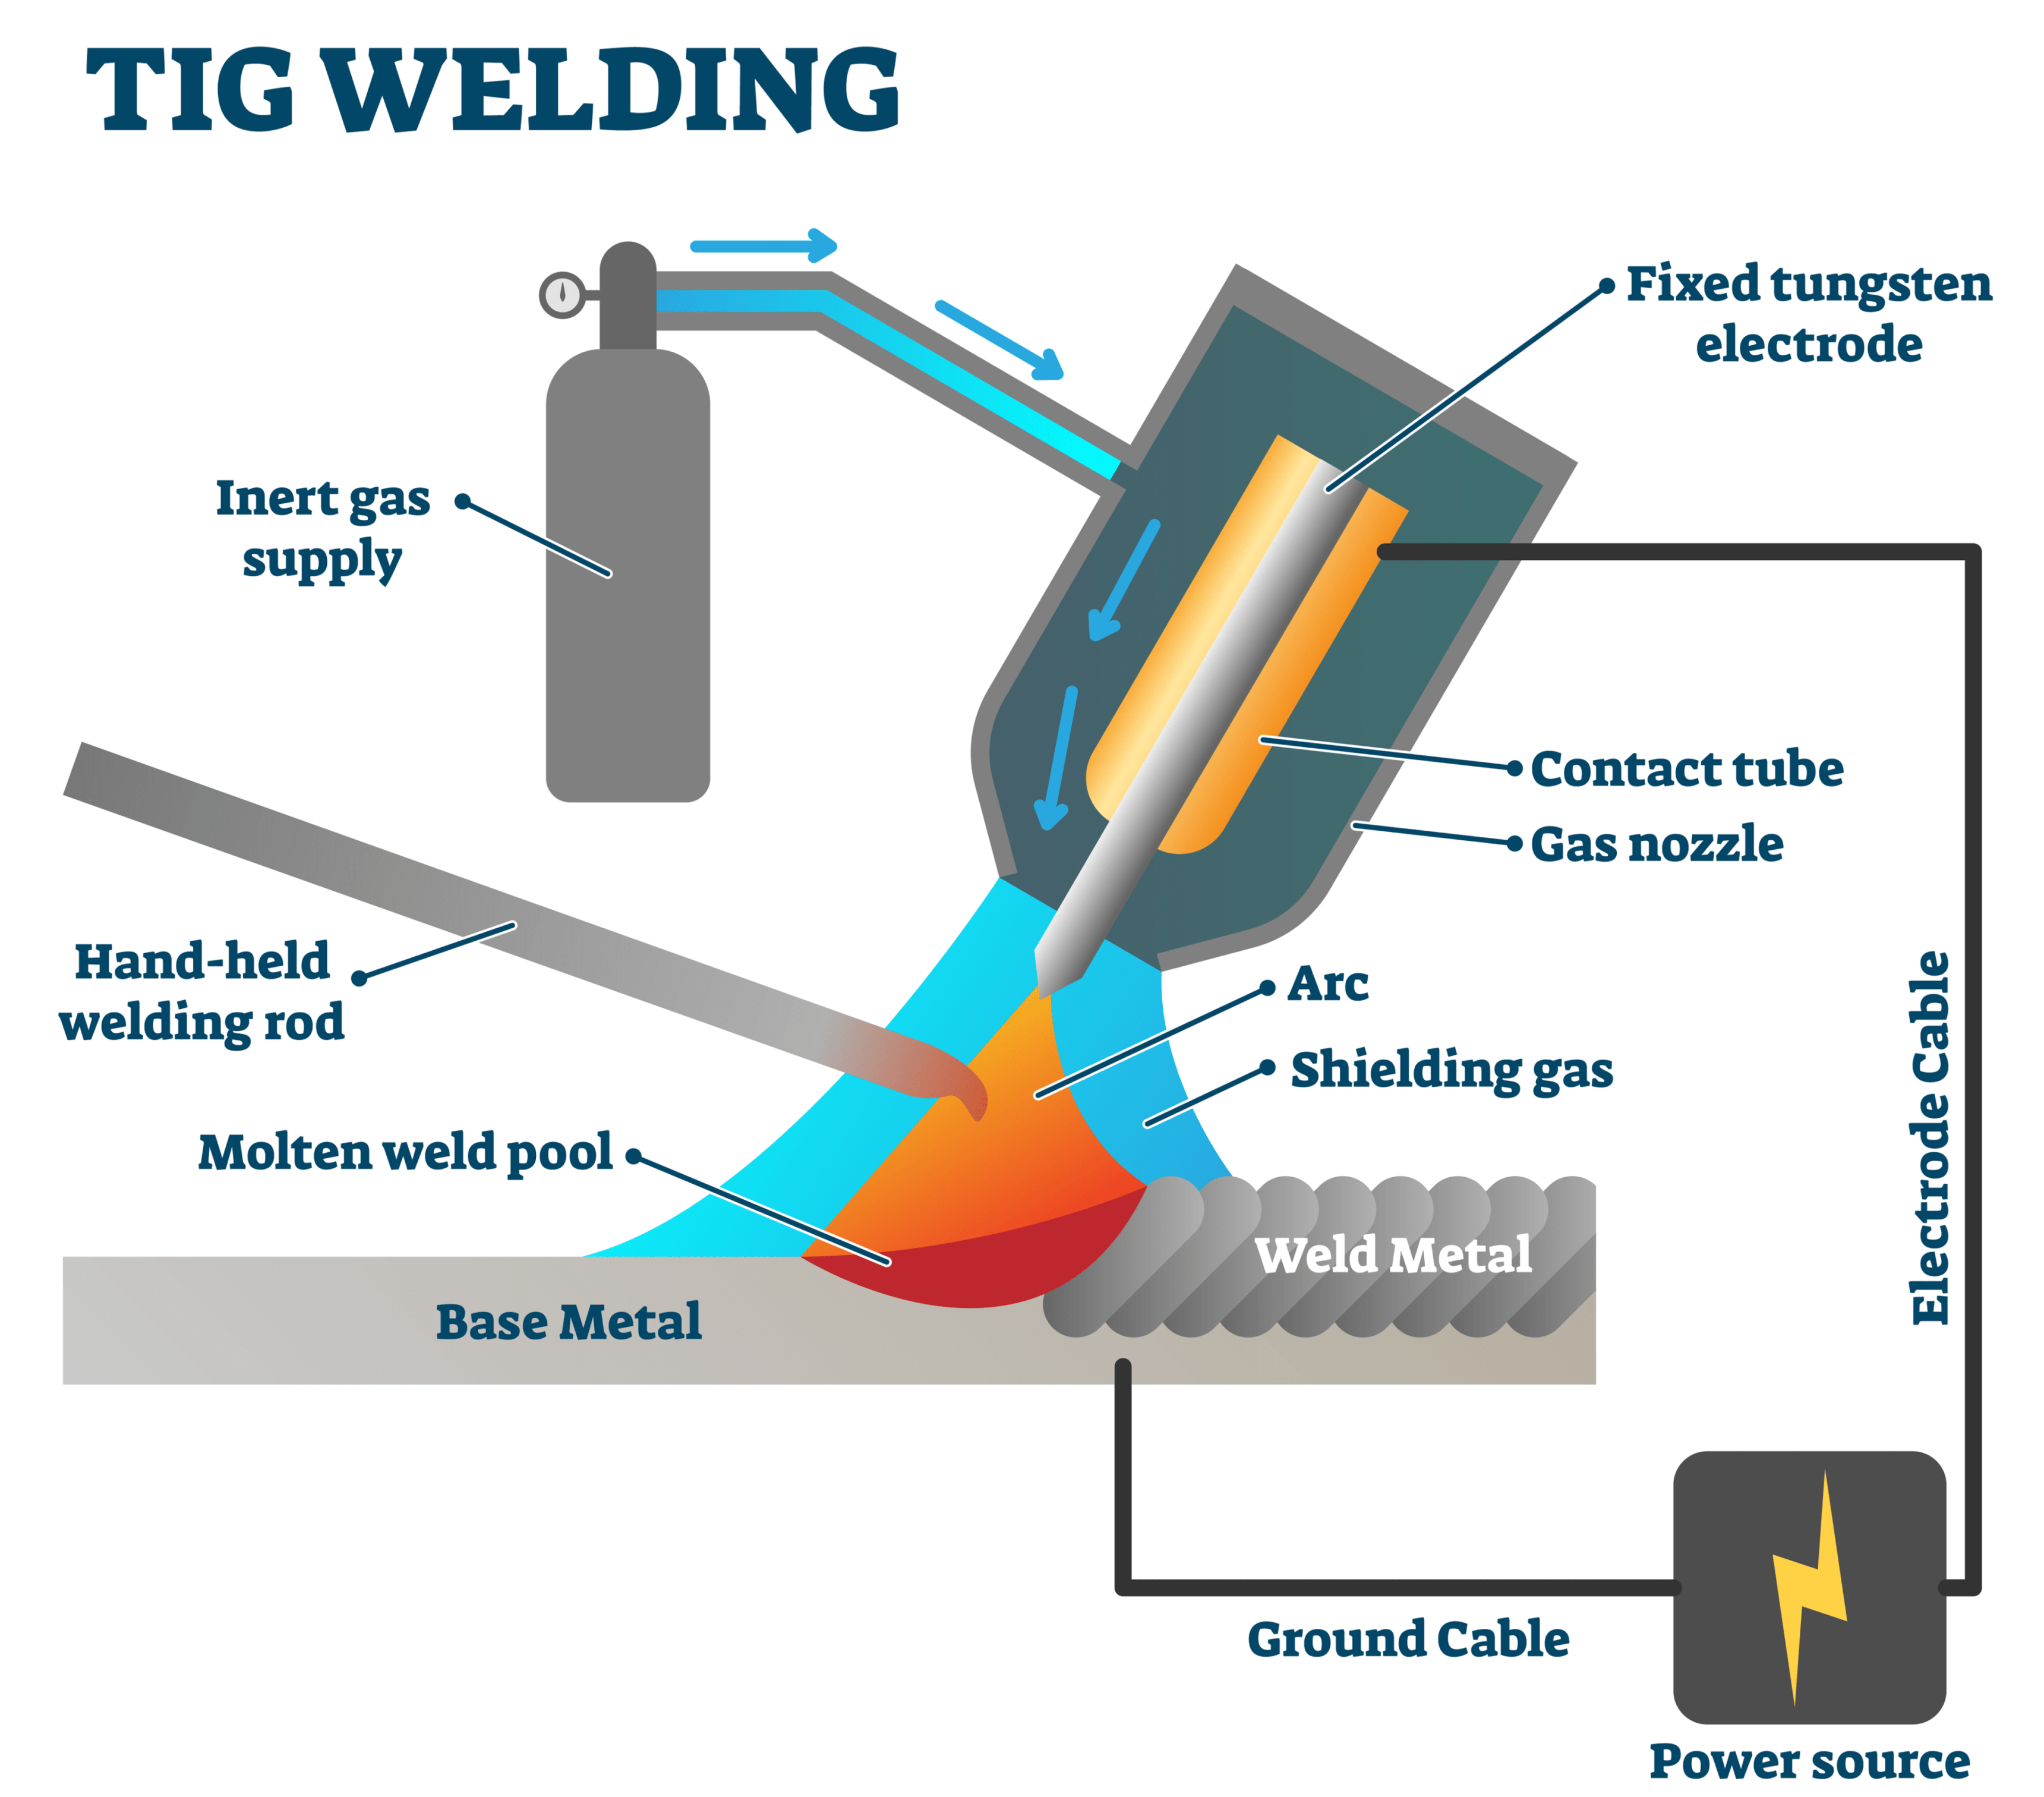 TIG welding image